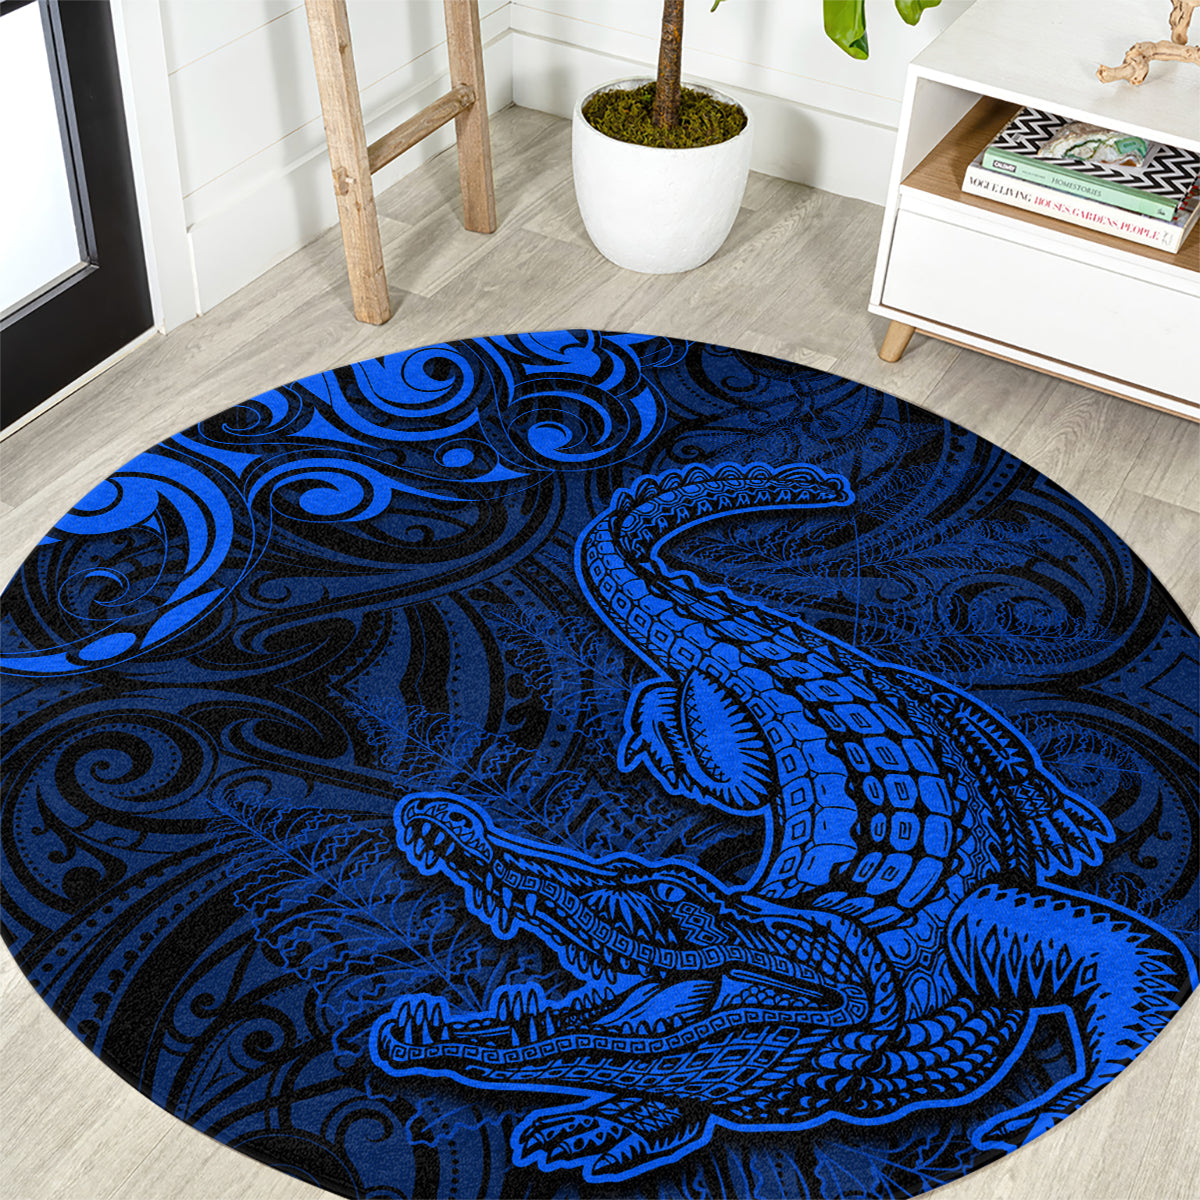 New Zealand Crocodile Tattoo and Fern Round Carpet Maori Pattern Blue Color